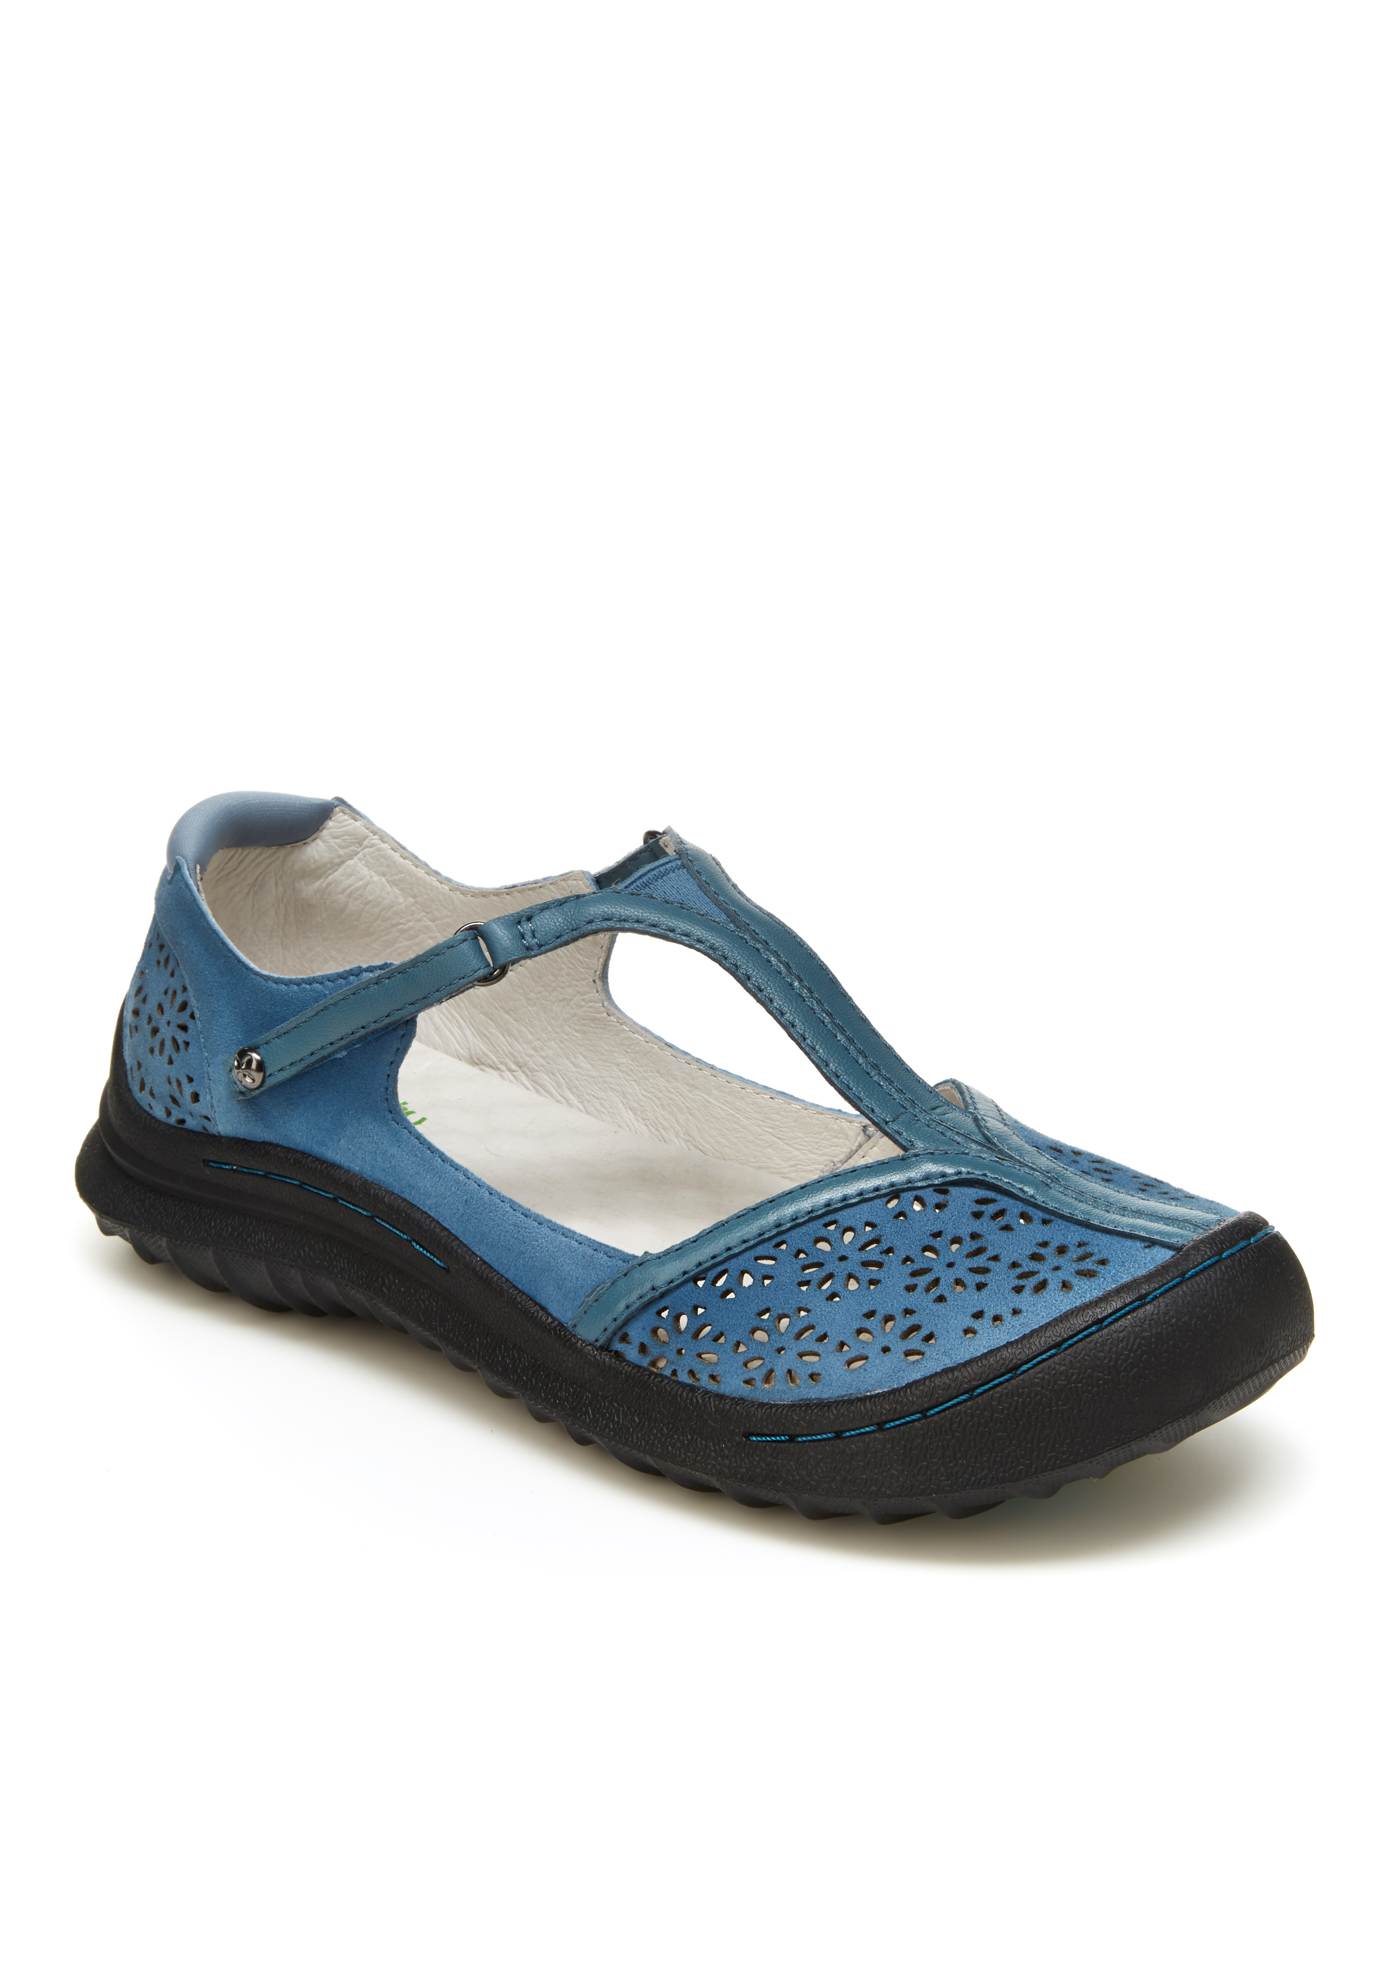 Womens ladies flat grip sole padded mary jane hook & loop comfort shoes size 